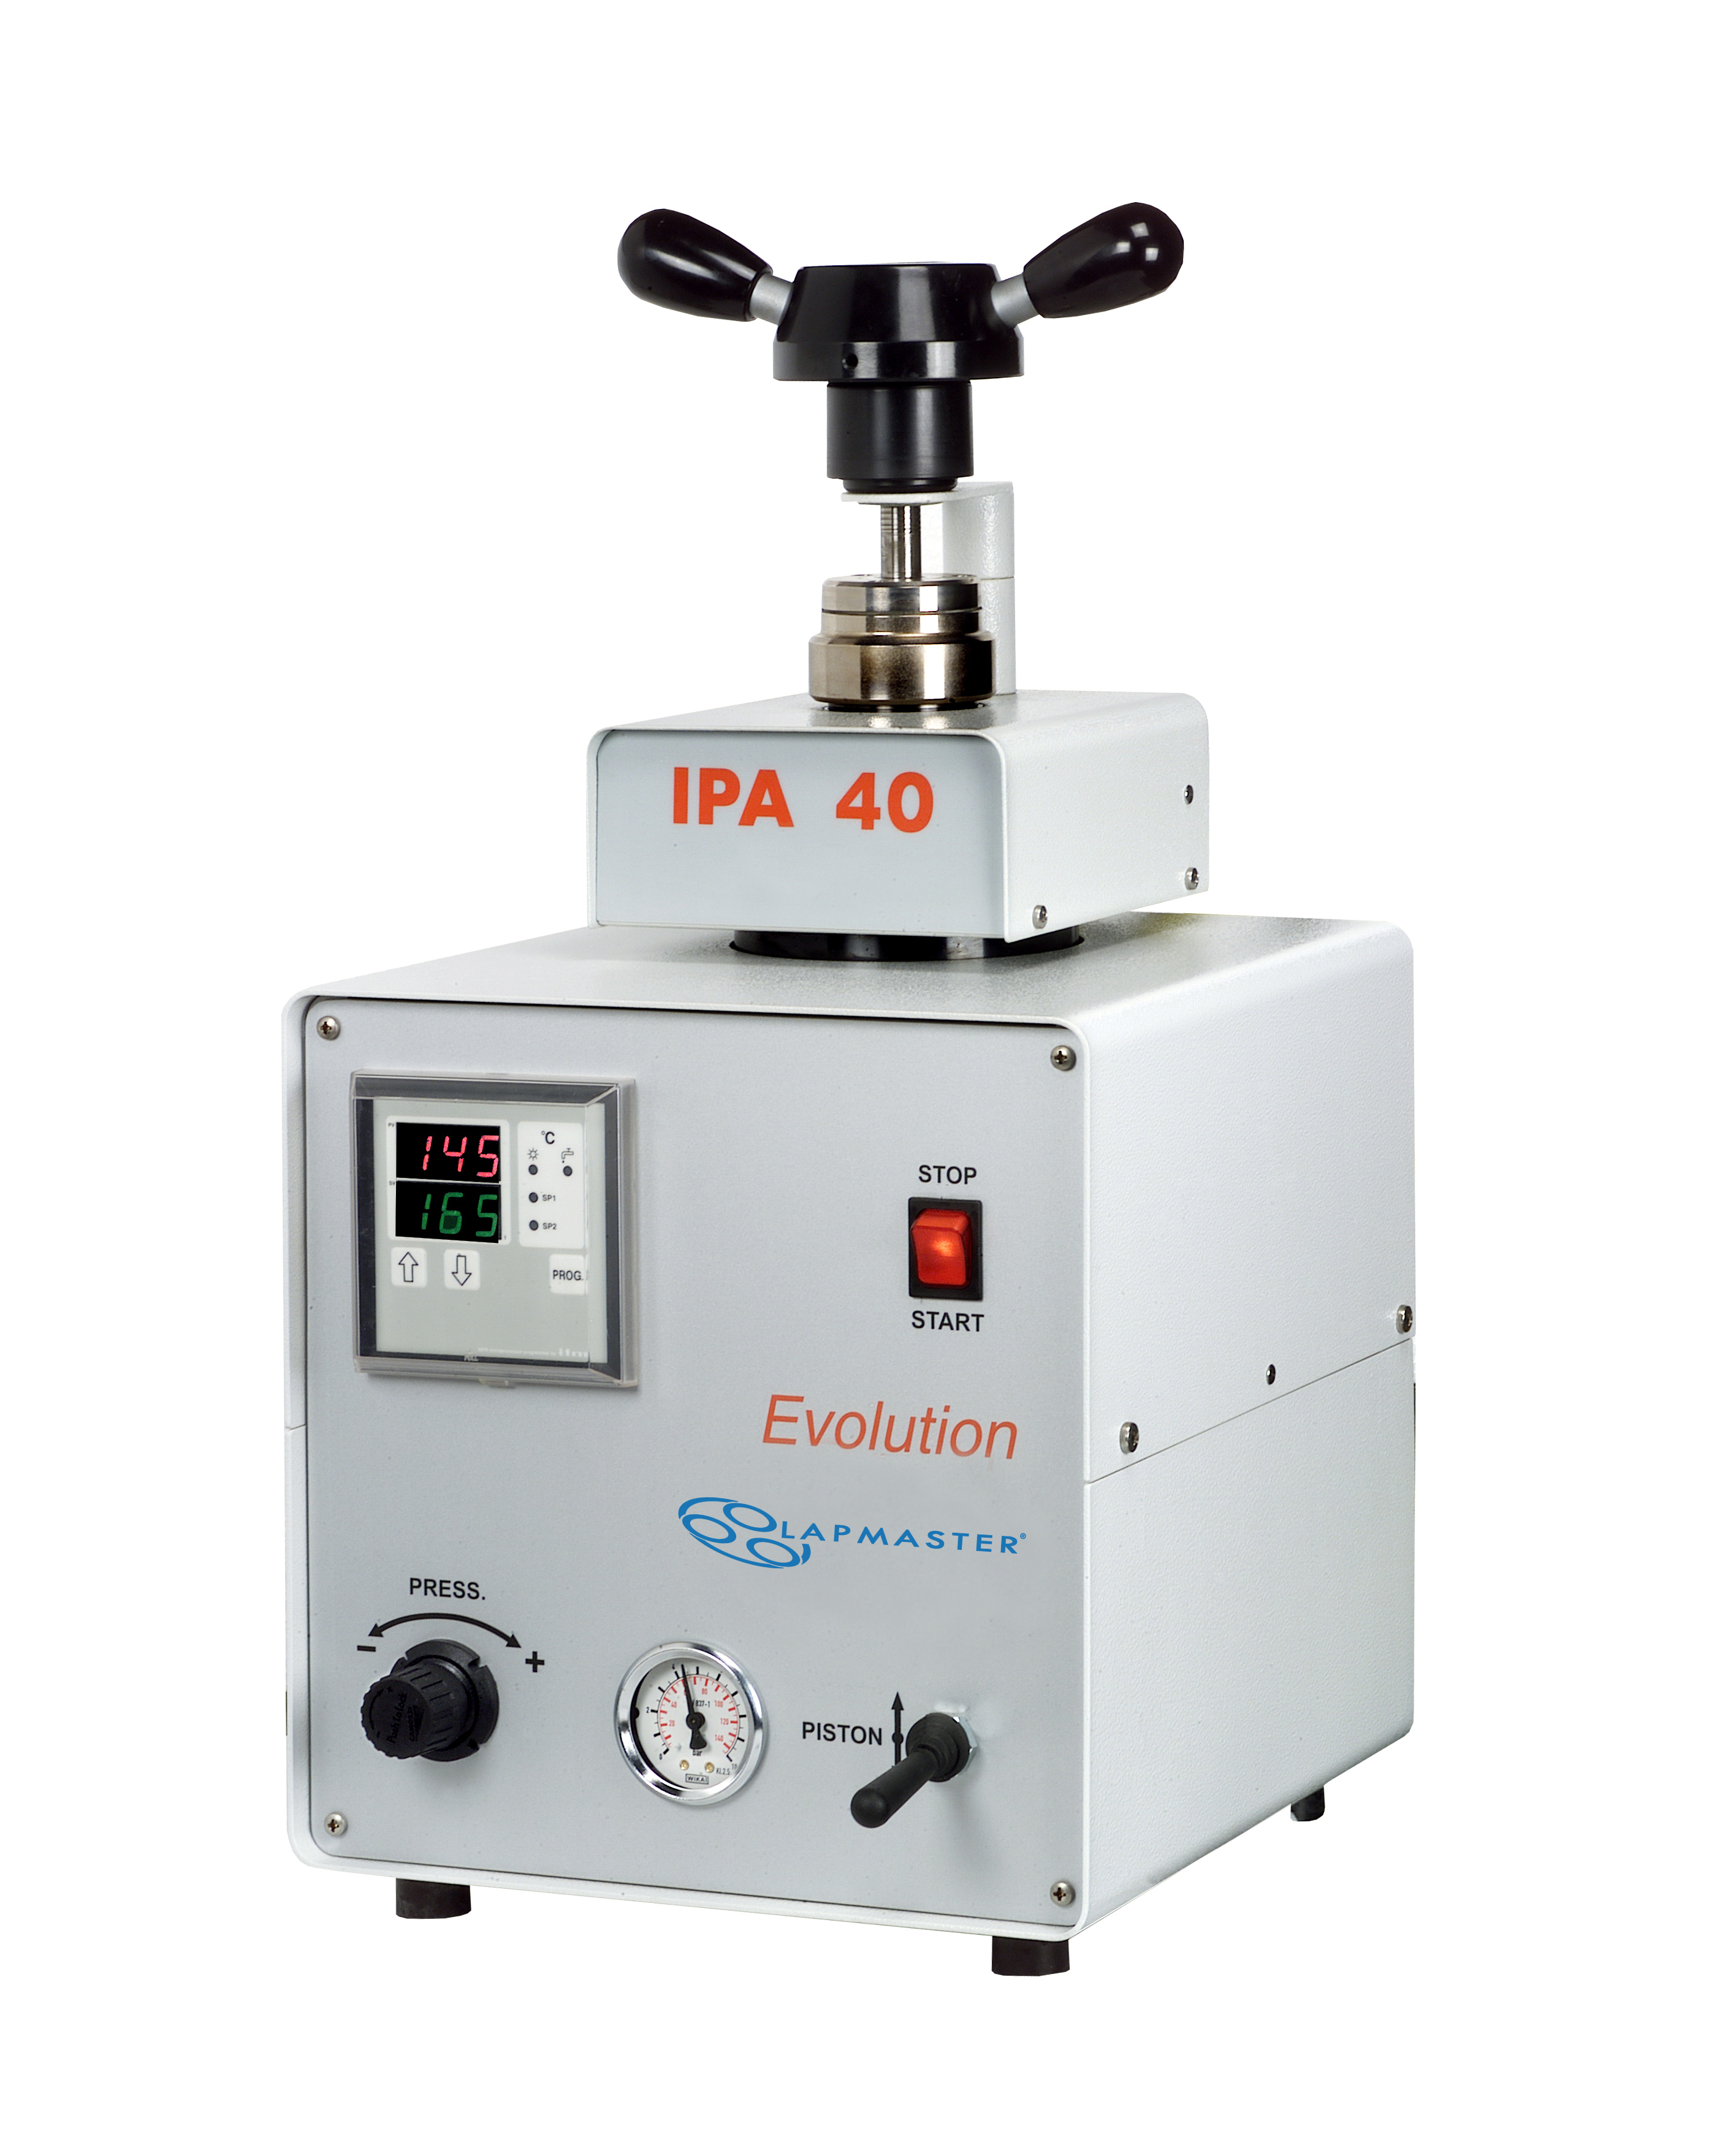 IPA TI Pneumatic grinding and polishing inherent in metallographic sample preparation